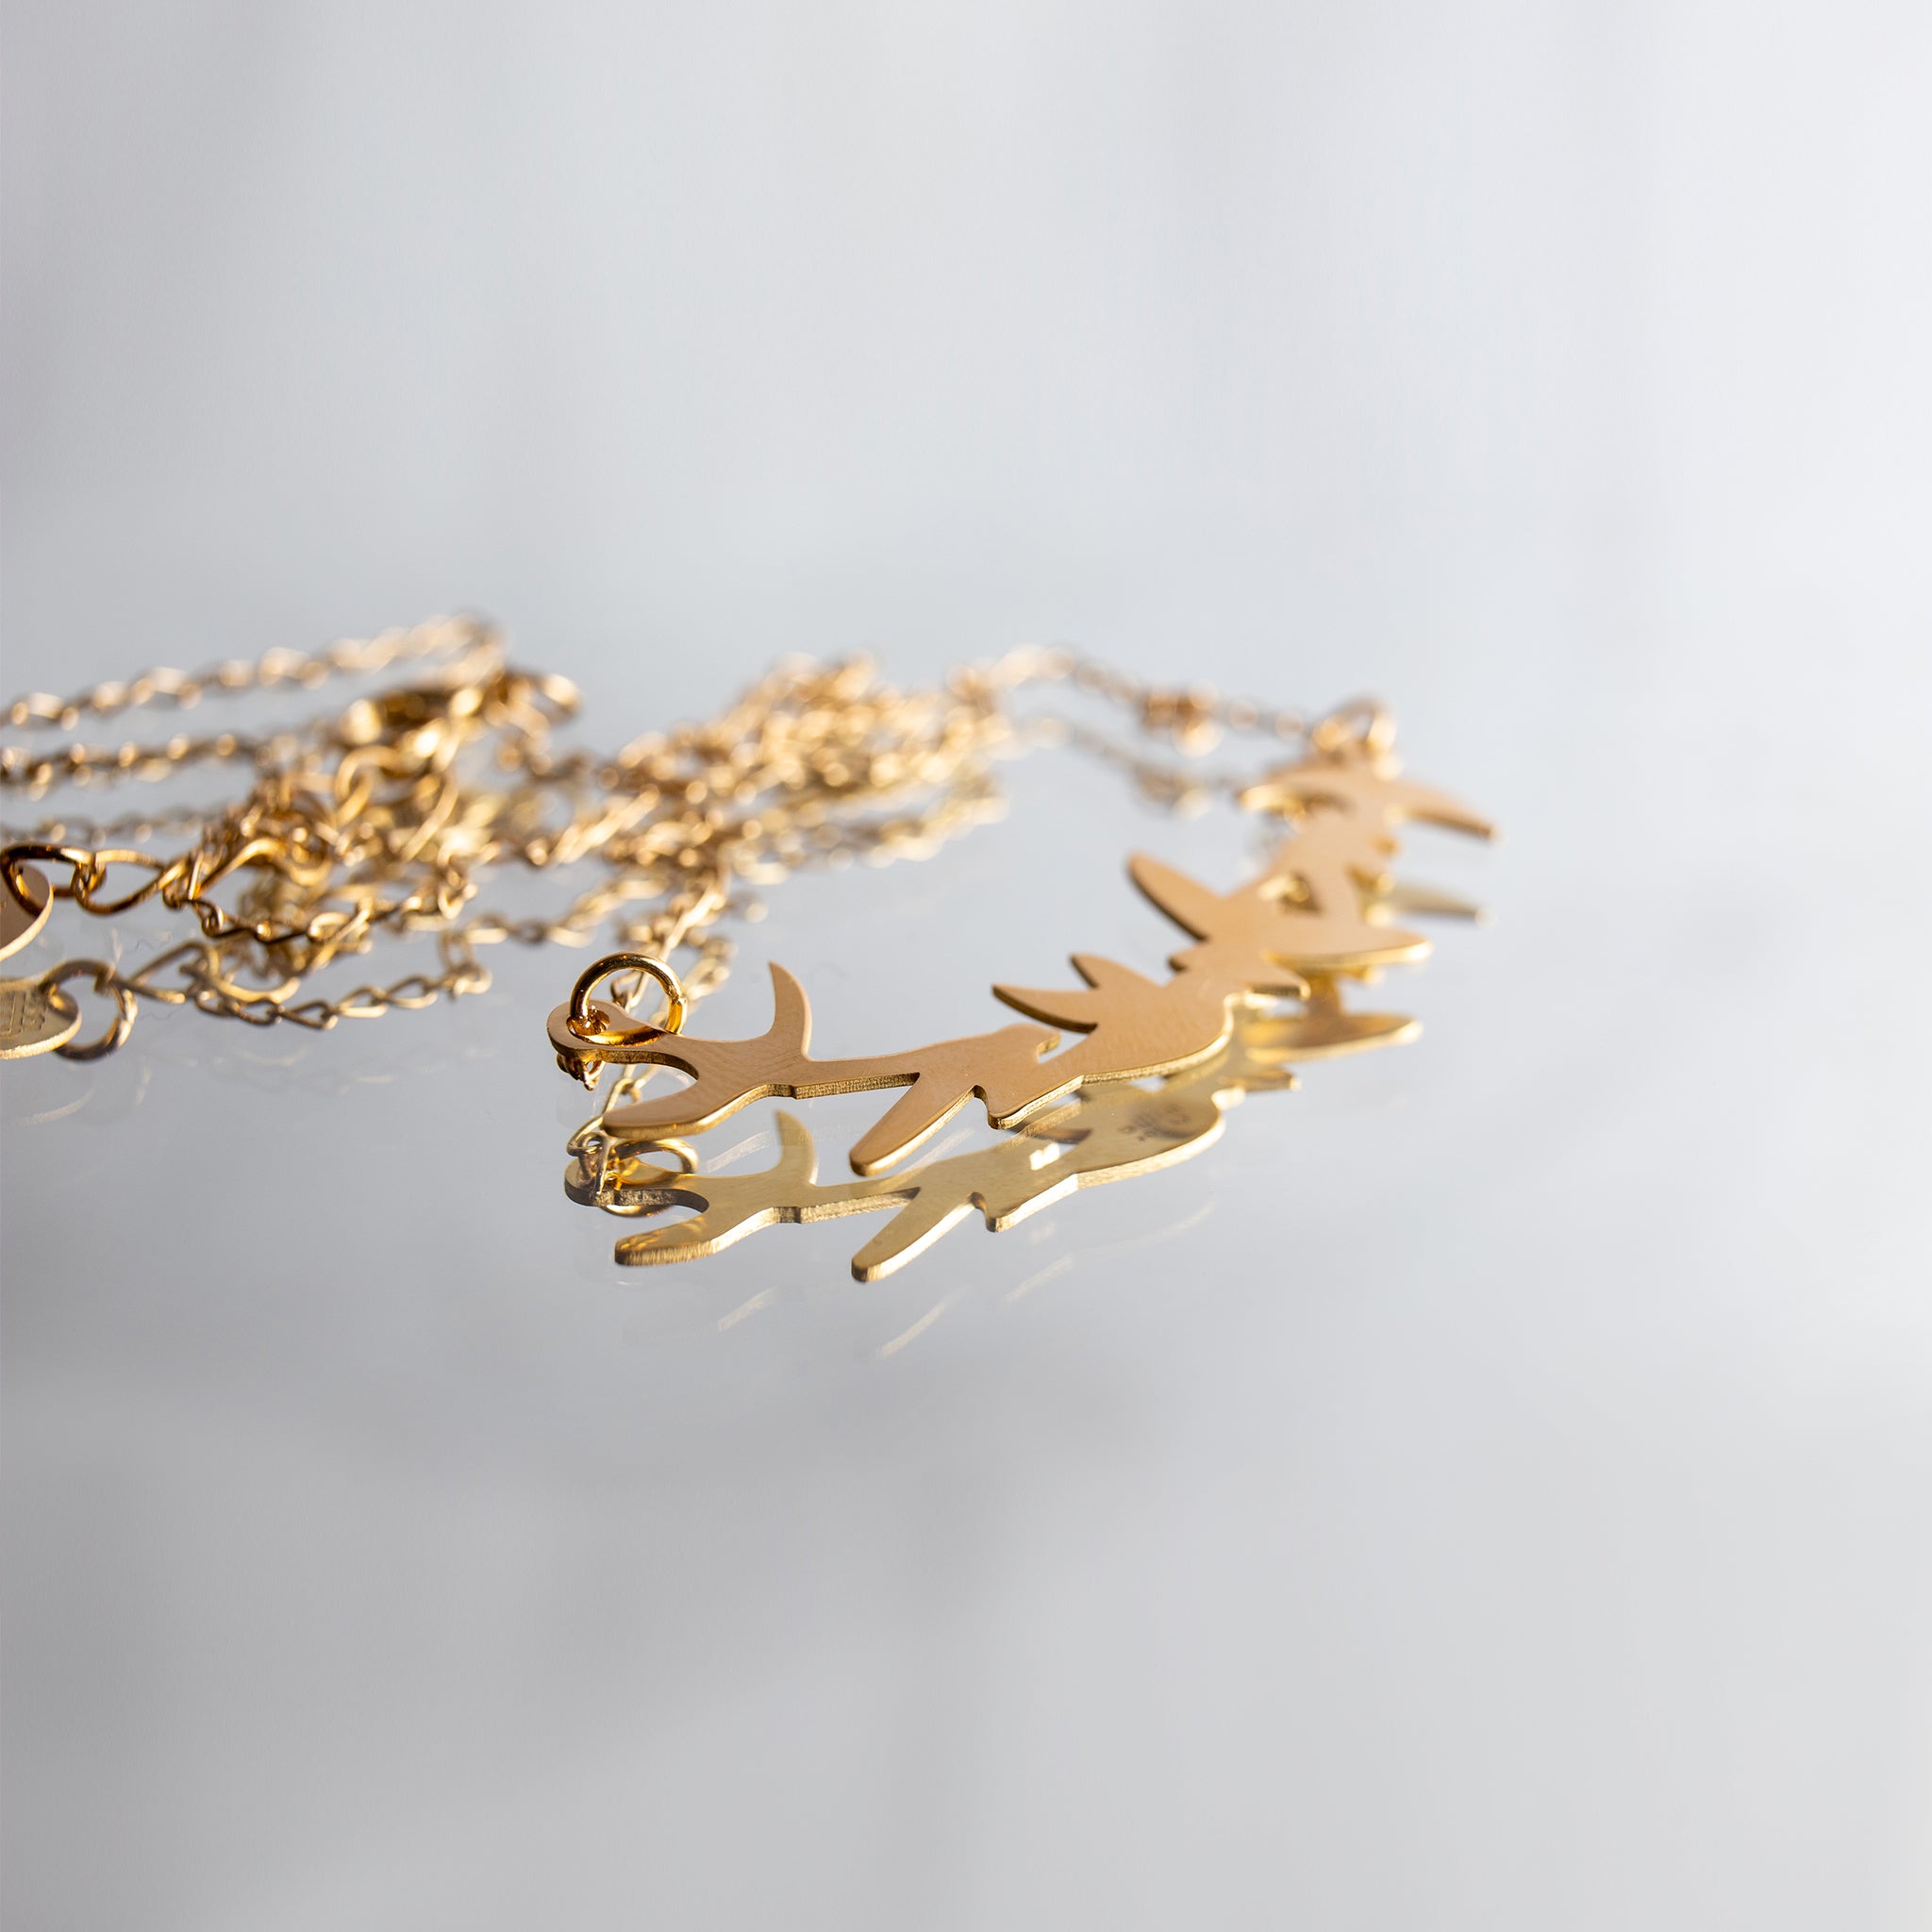 Millié Jewelry - Millié Jewelry - Flying Birds Necklace - Collares - Diseño Mexicano - Hecho en México